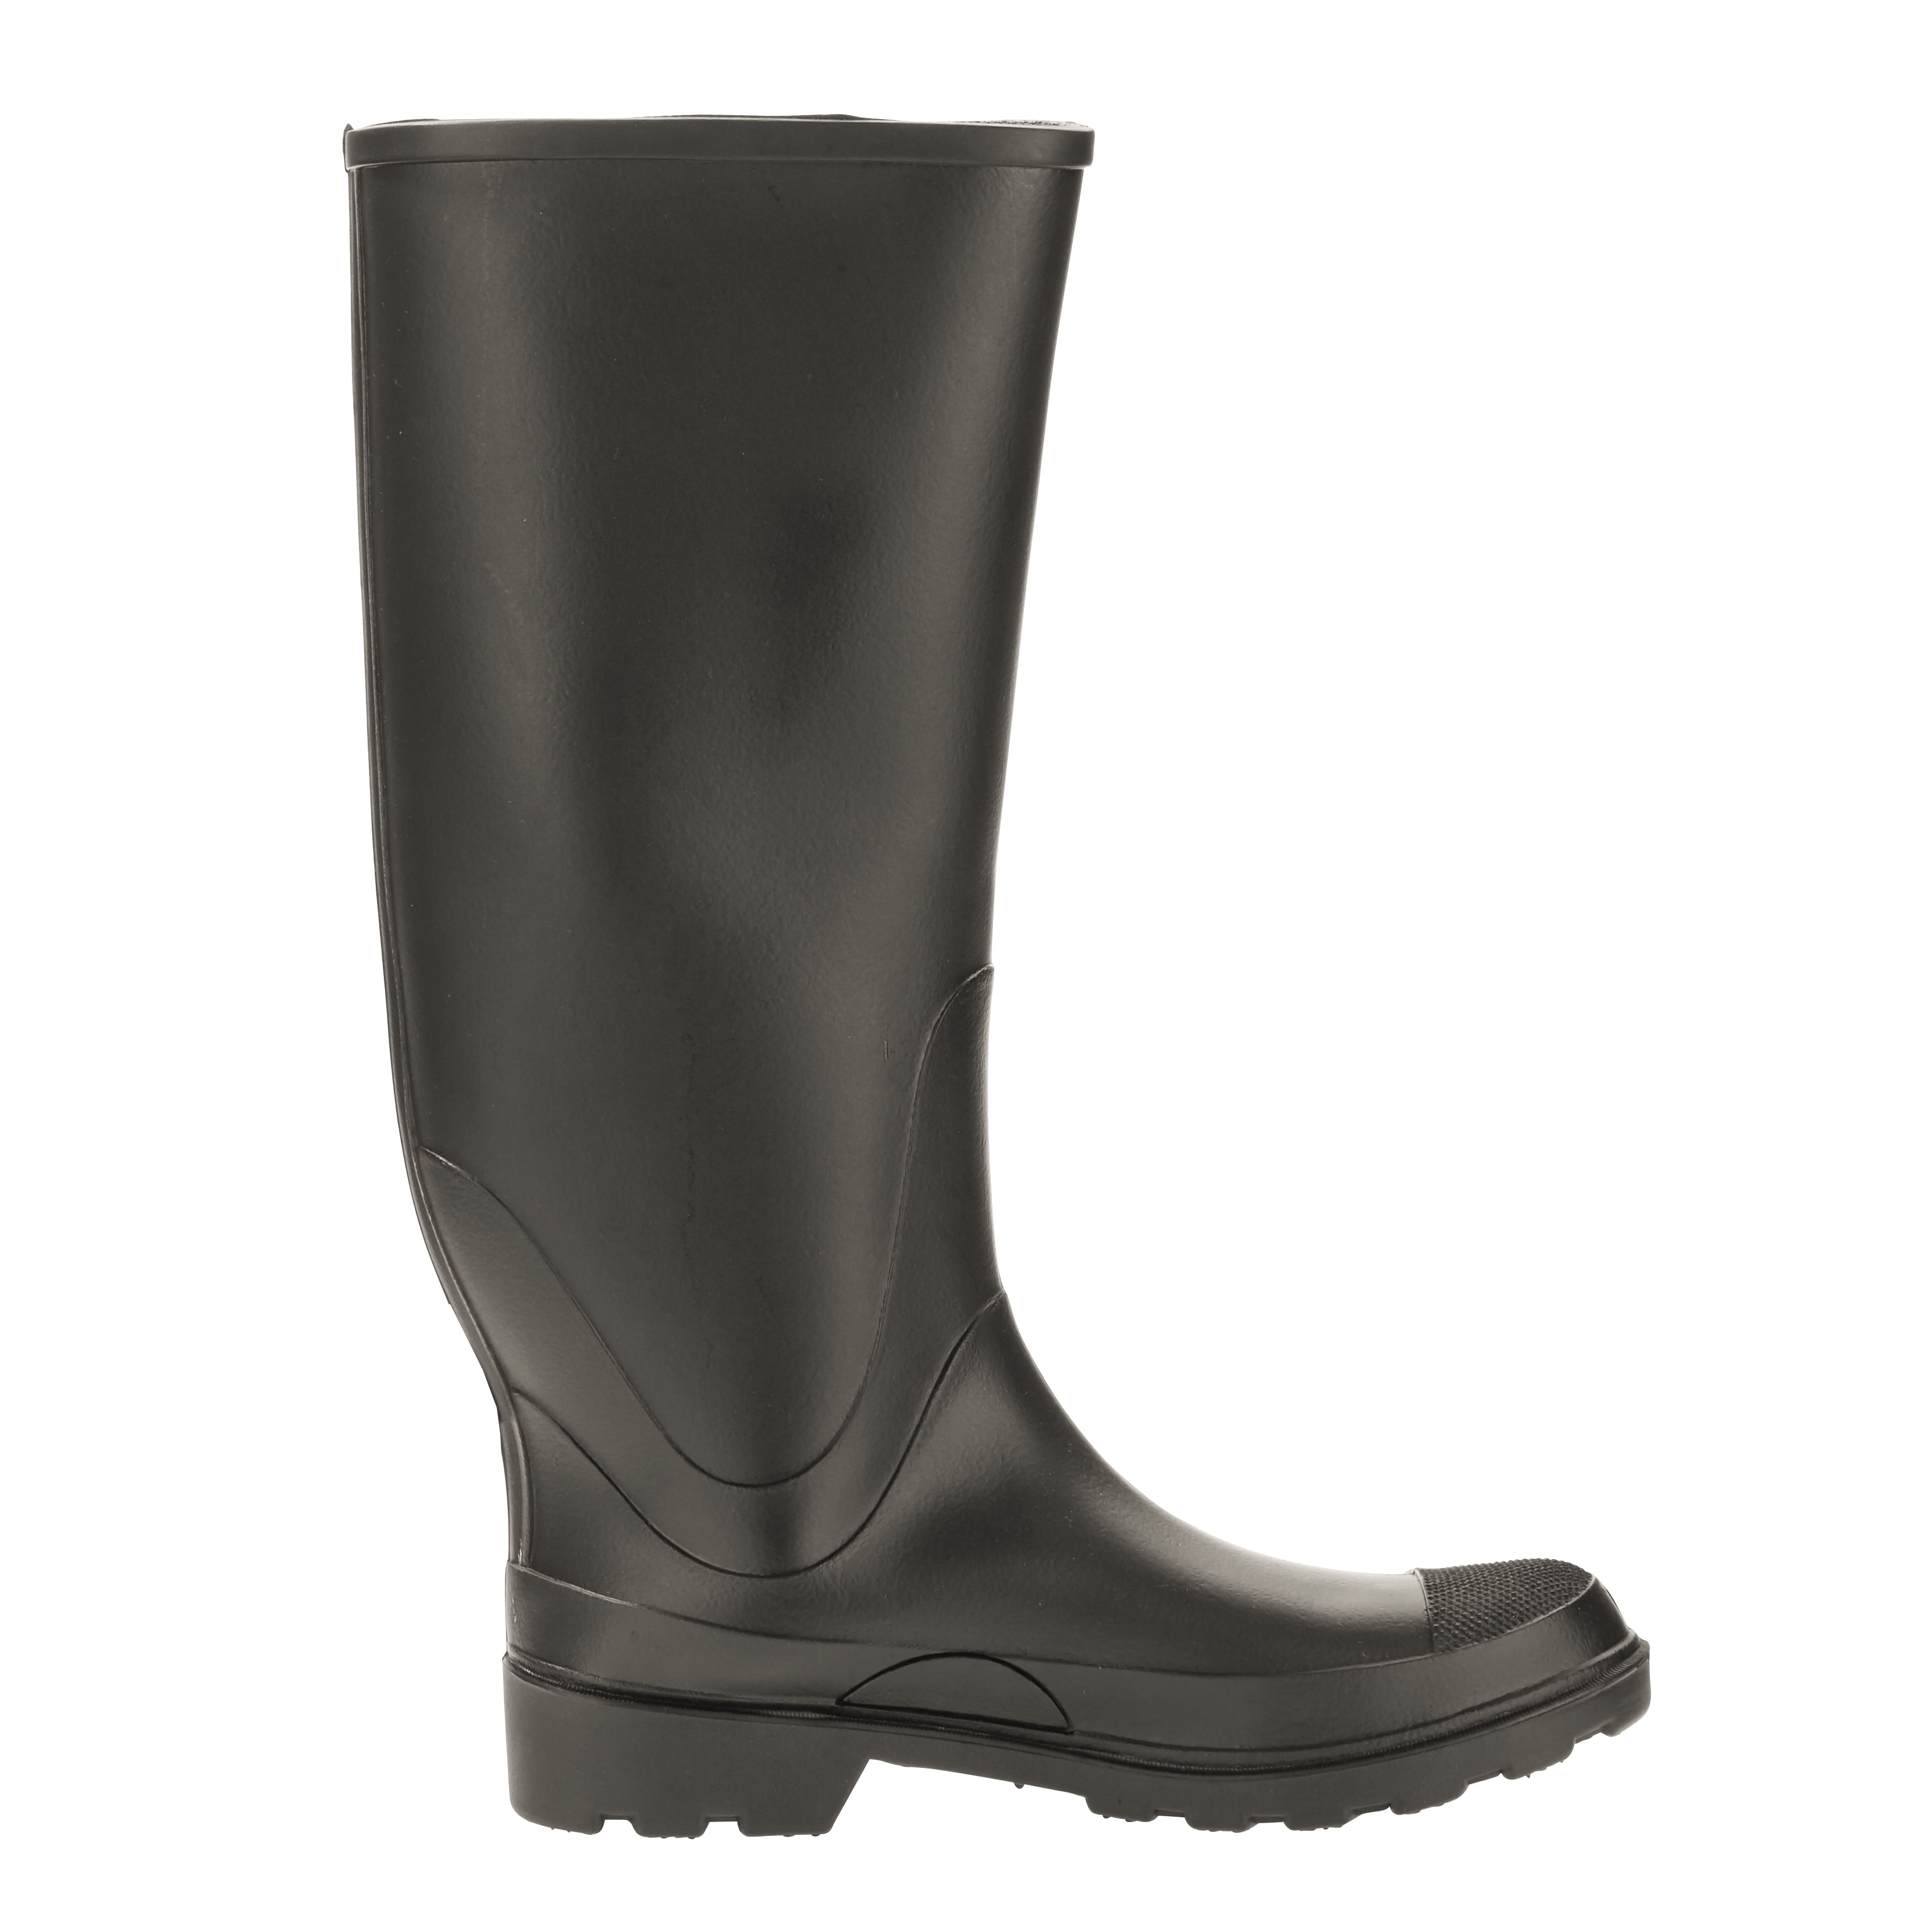 Heartland Footwear Women's Black Rain Boot - Walmart.com